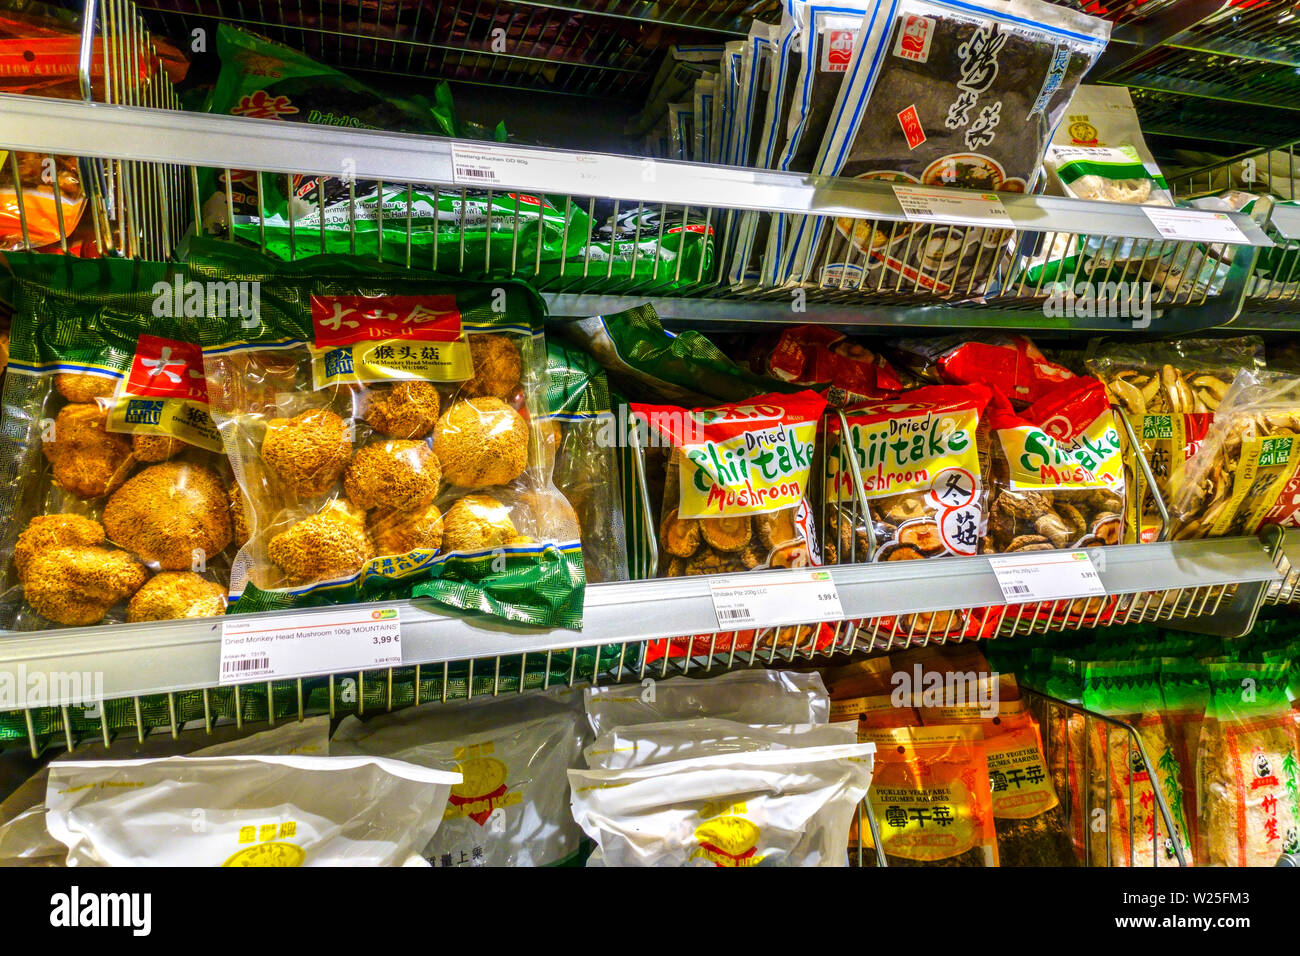 Asian supermarket 'Go Asia' supermarket shelves, dried mushrooms, Dresden, Germany Supermarket shelf Stock Photo